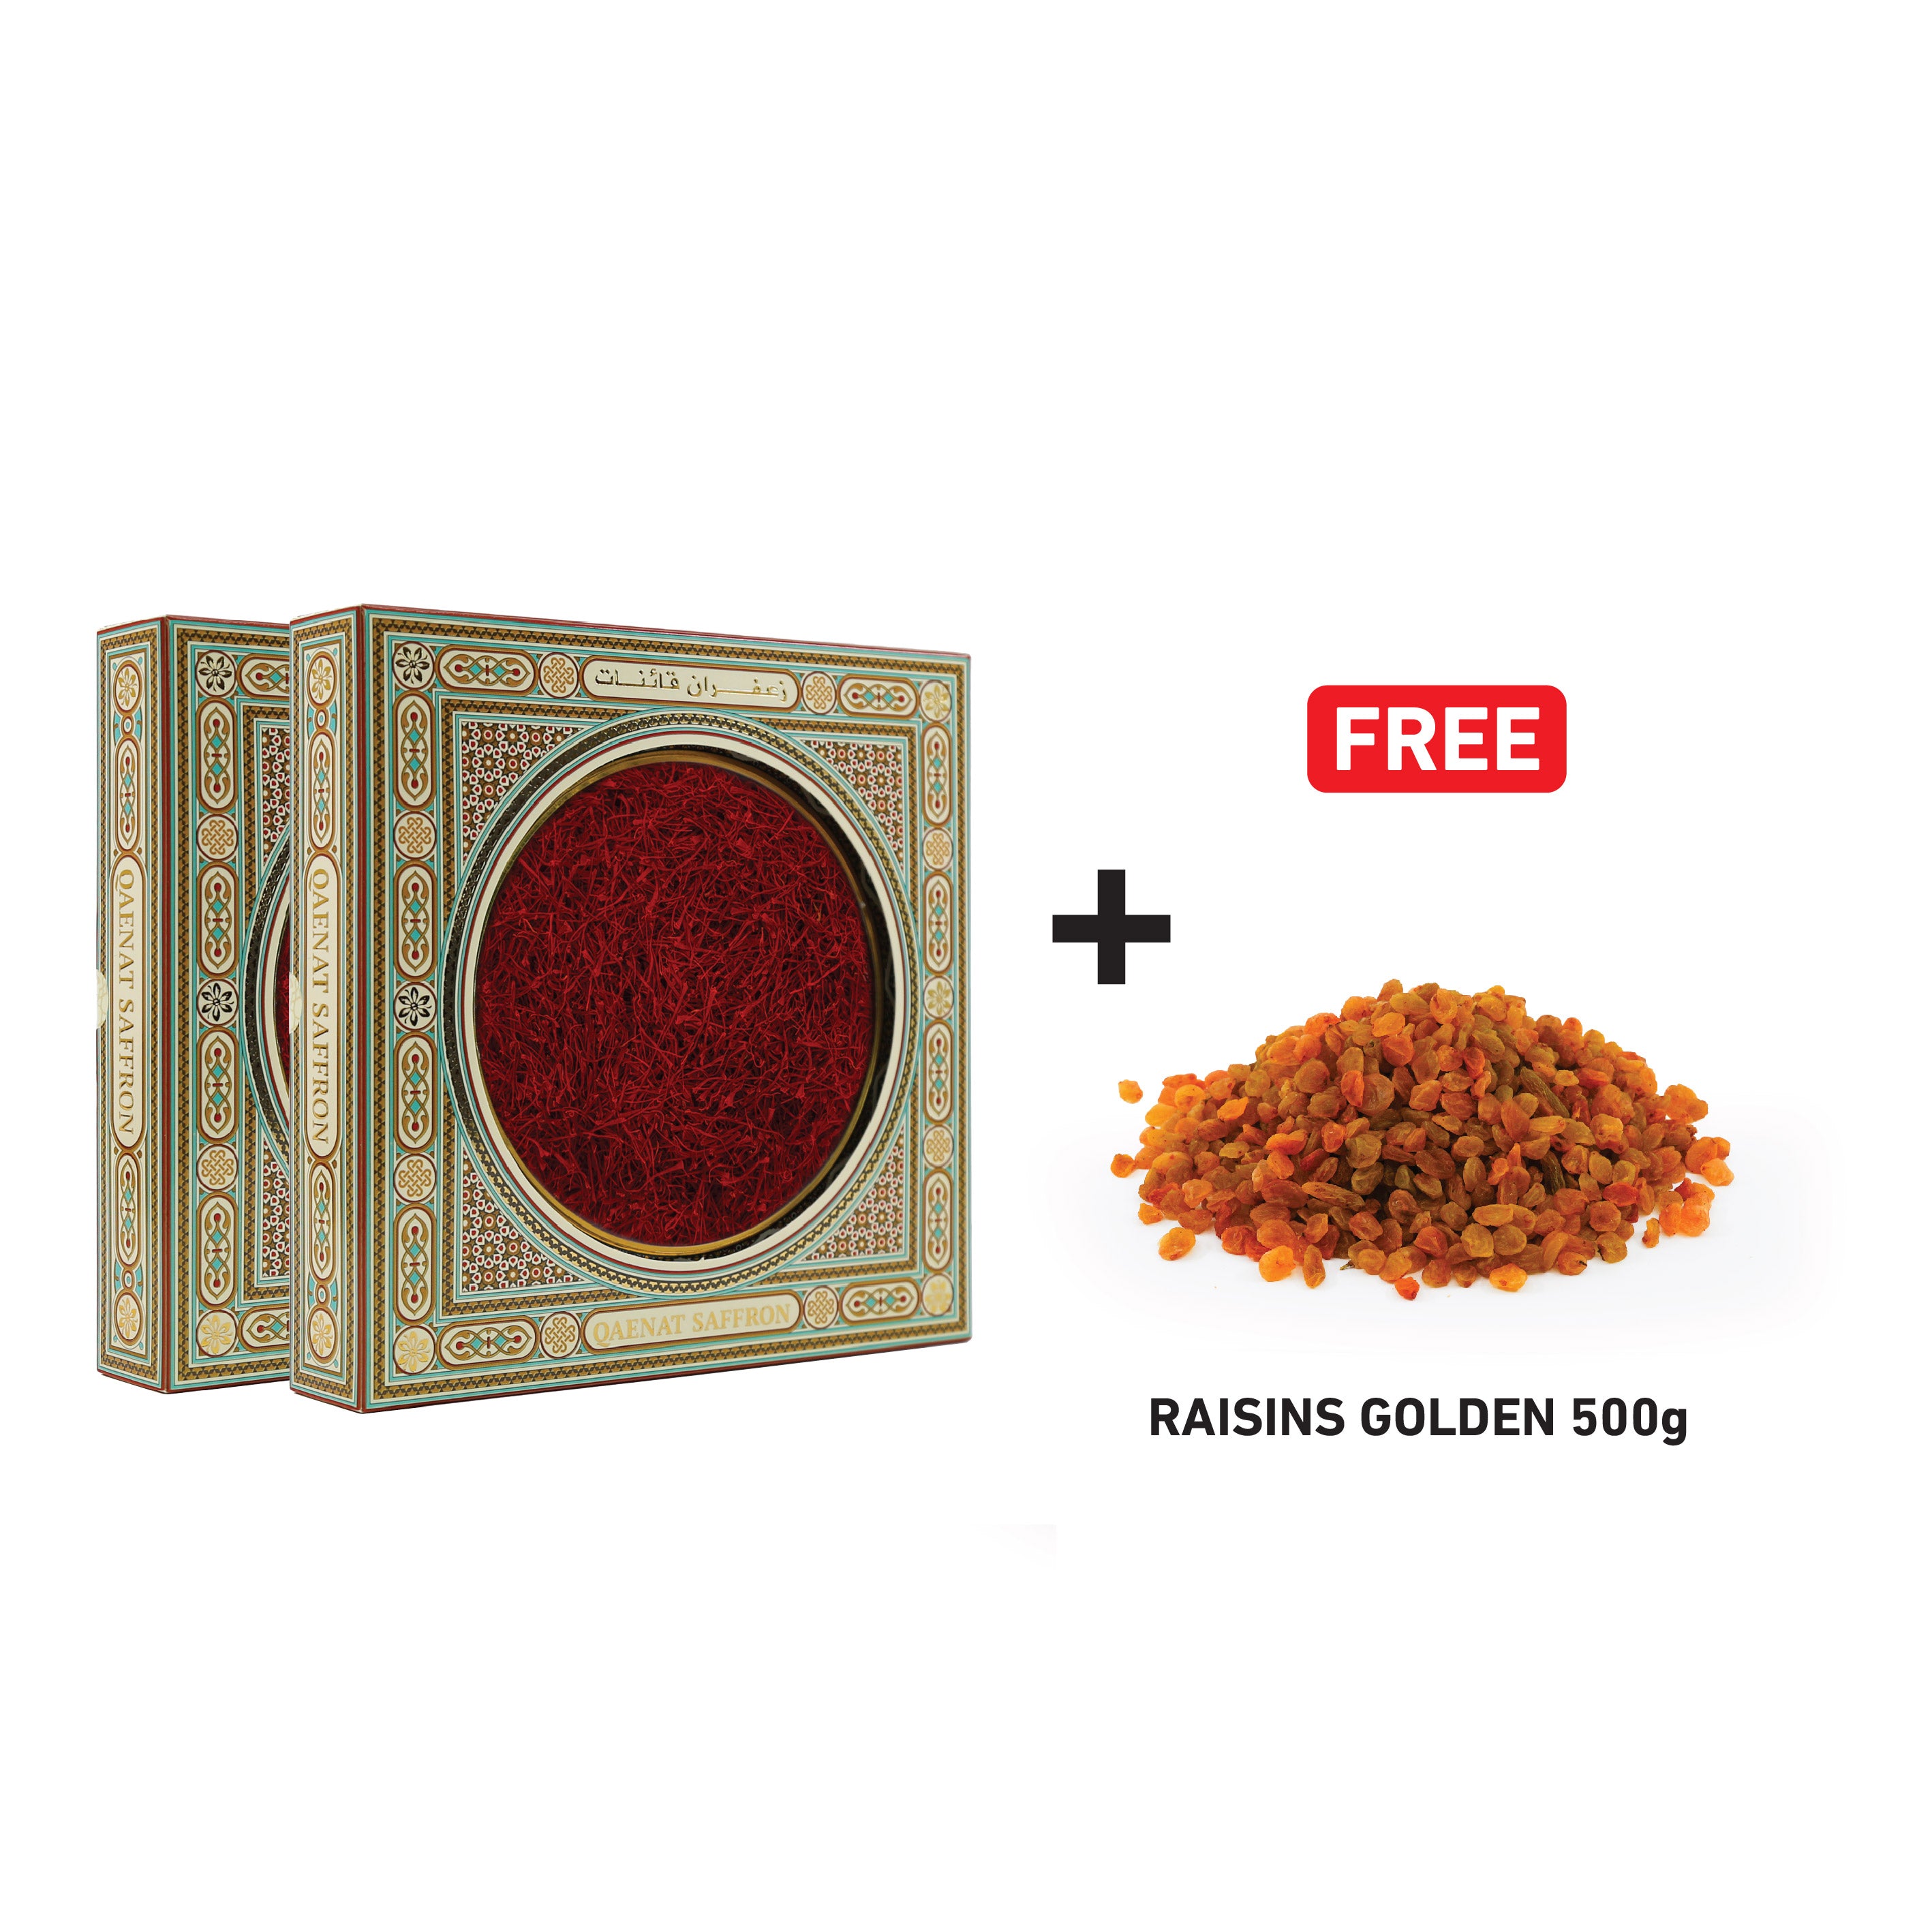 Saffron Super Negin (25g x 2 pcs) + FREE Golden Raisins 500g